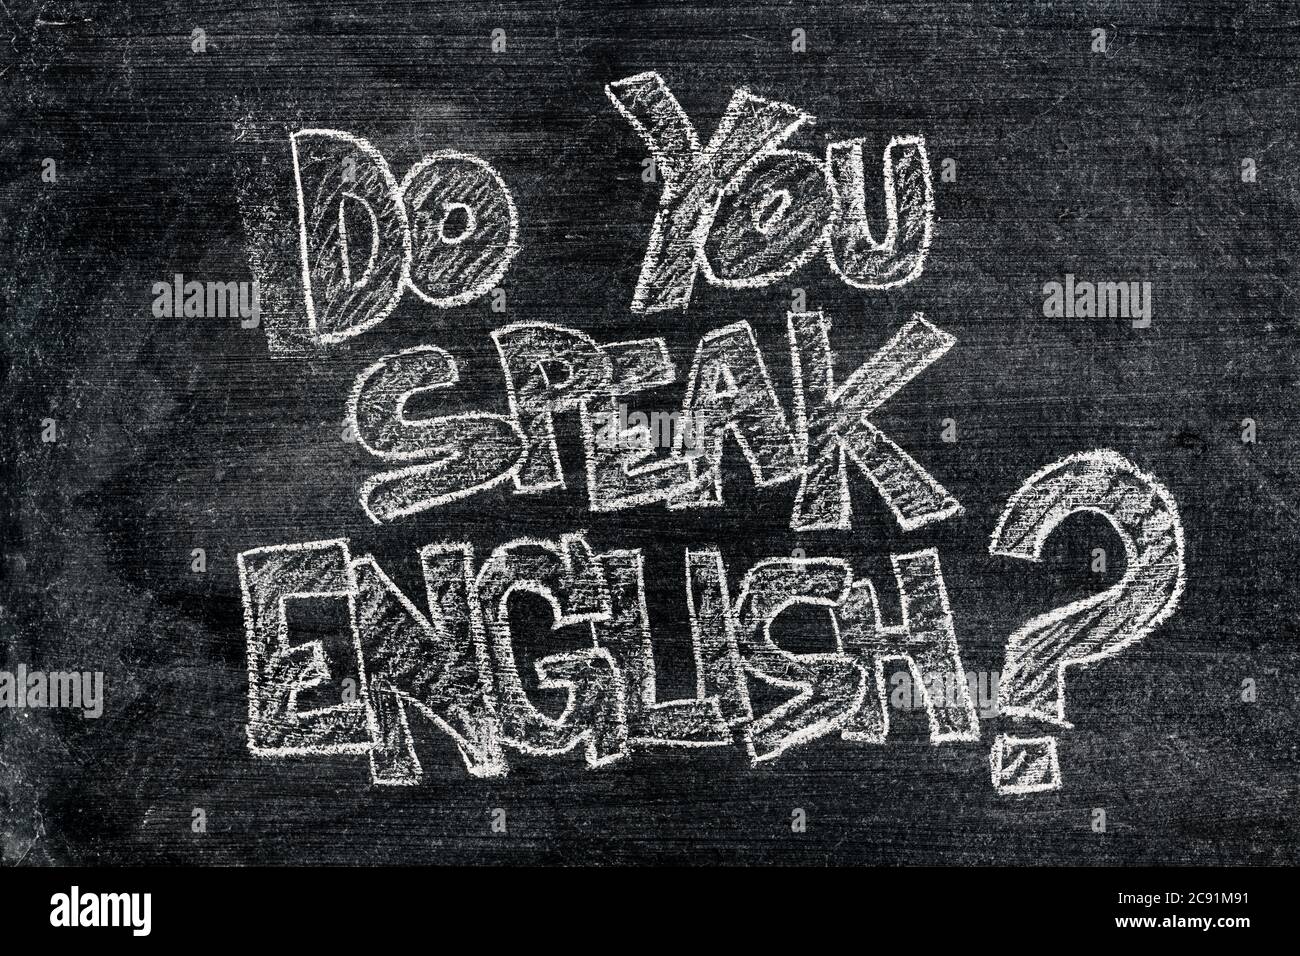 Do You Speak English written on blackboard Stock Photo